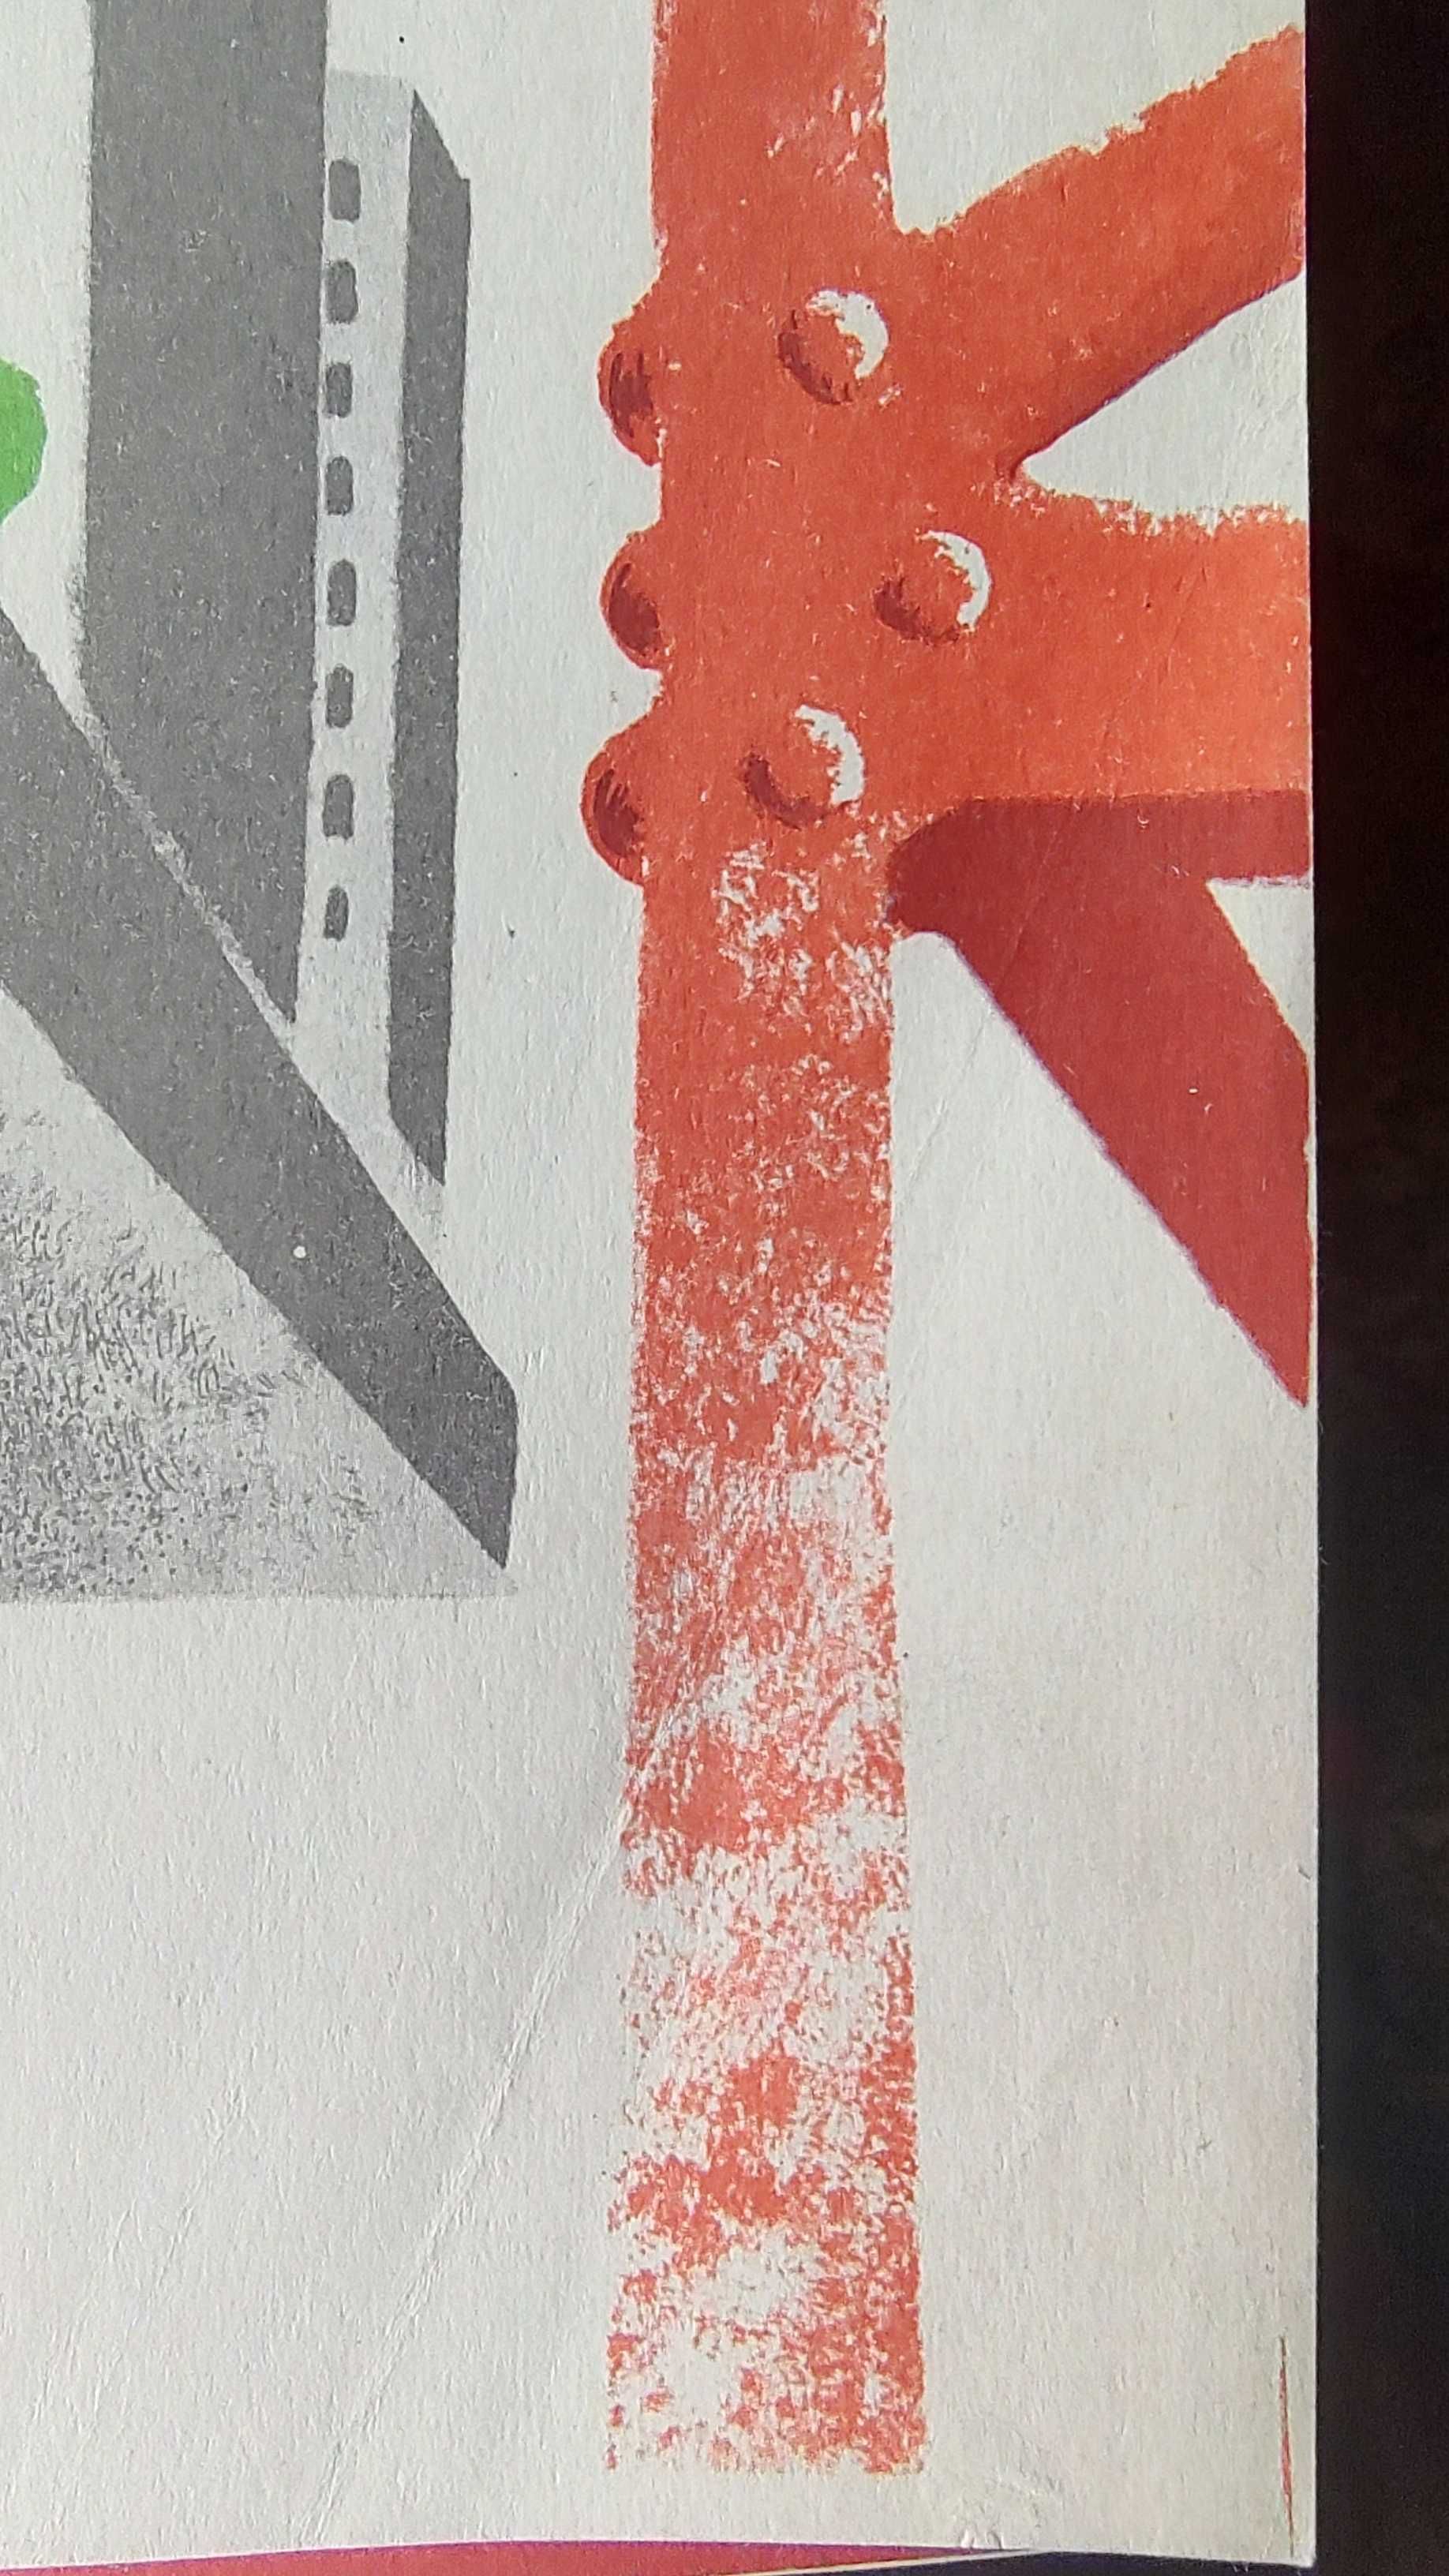 Плаката Постер СРСР ("Боевой карандаш")